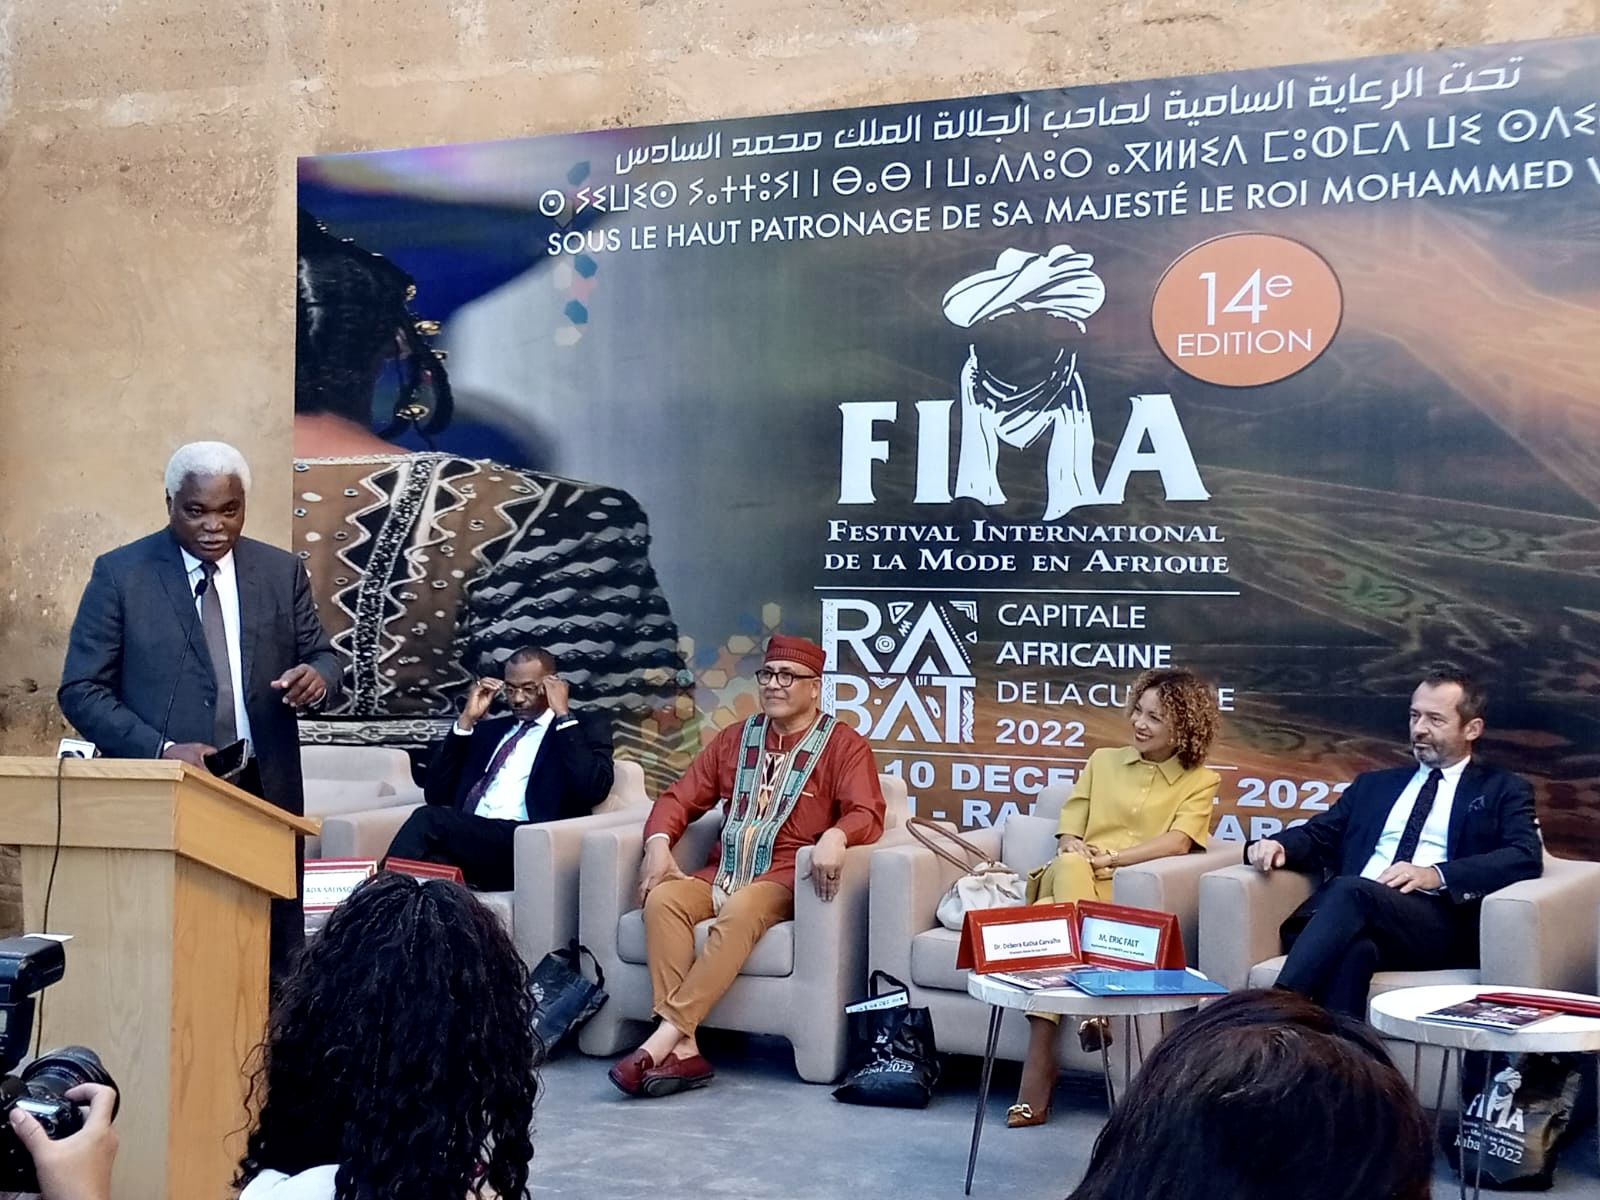 Festival International de la Mode à Rabat Capitale Africaine de la Culture